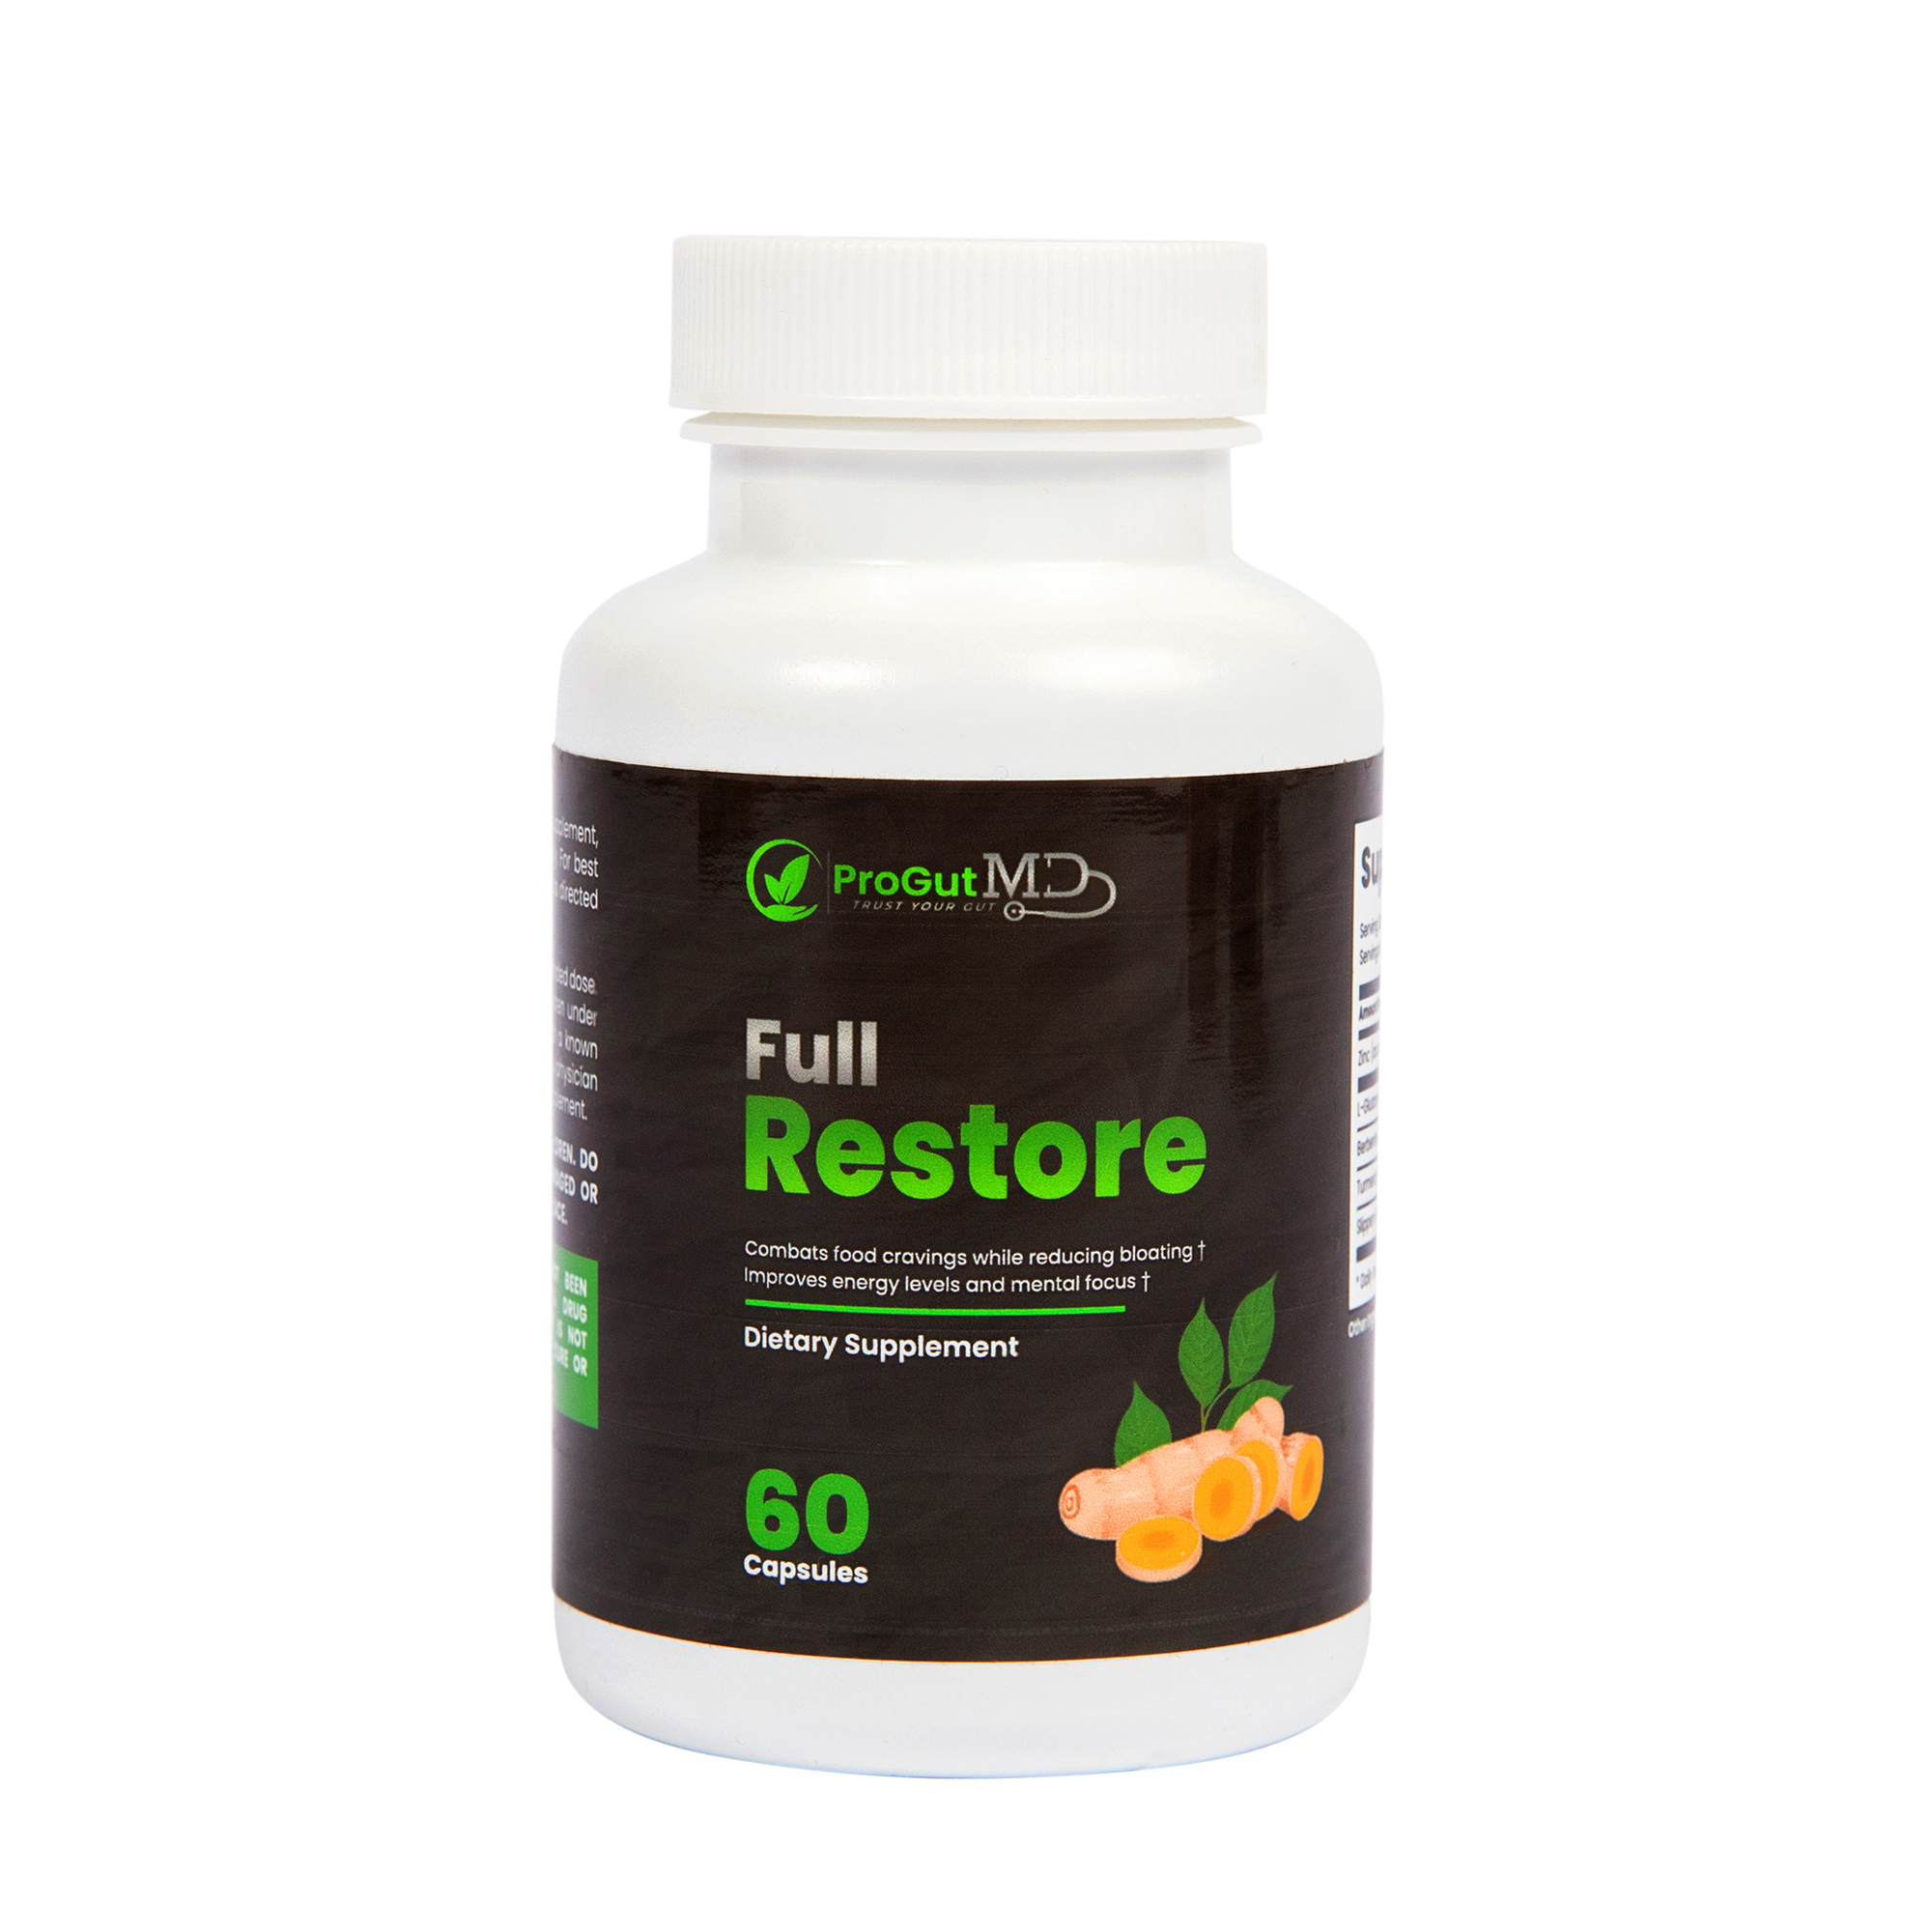 A bottle of Full Restore gut health supplement.